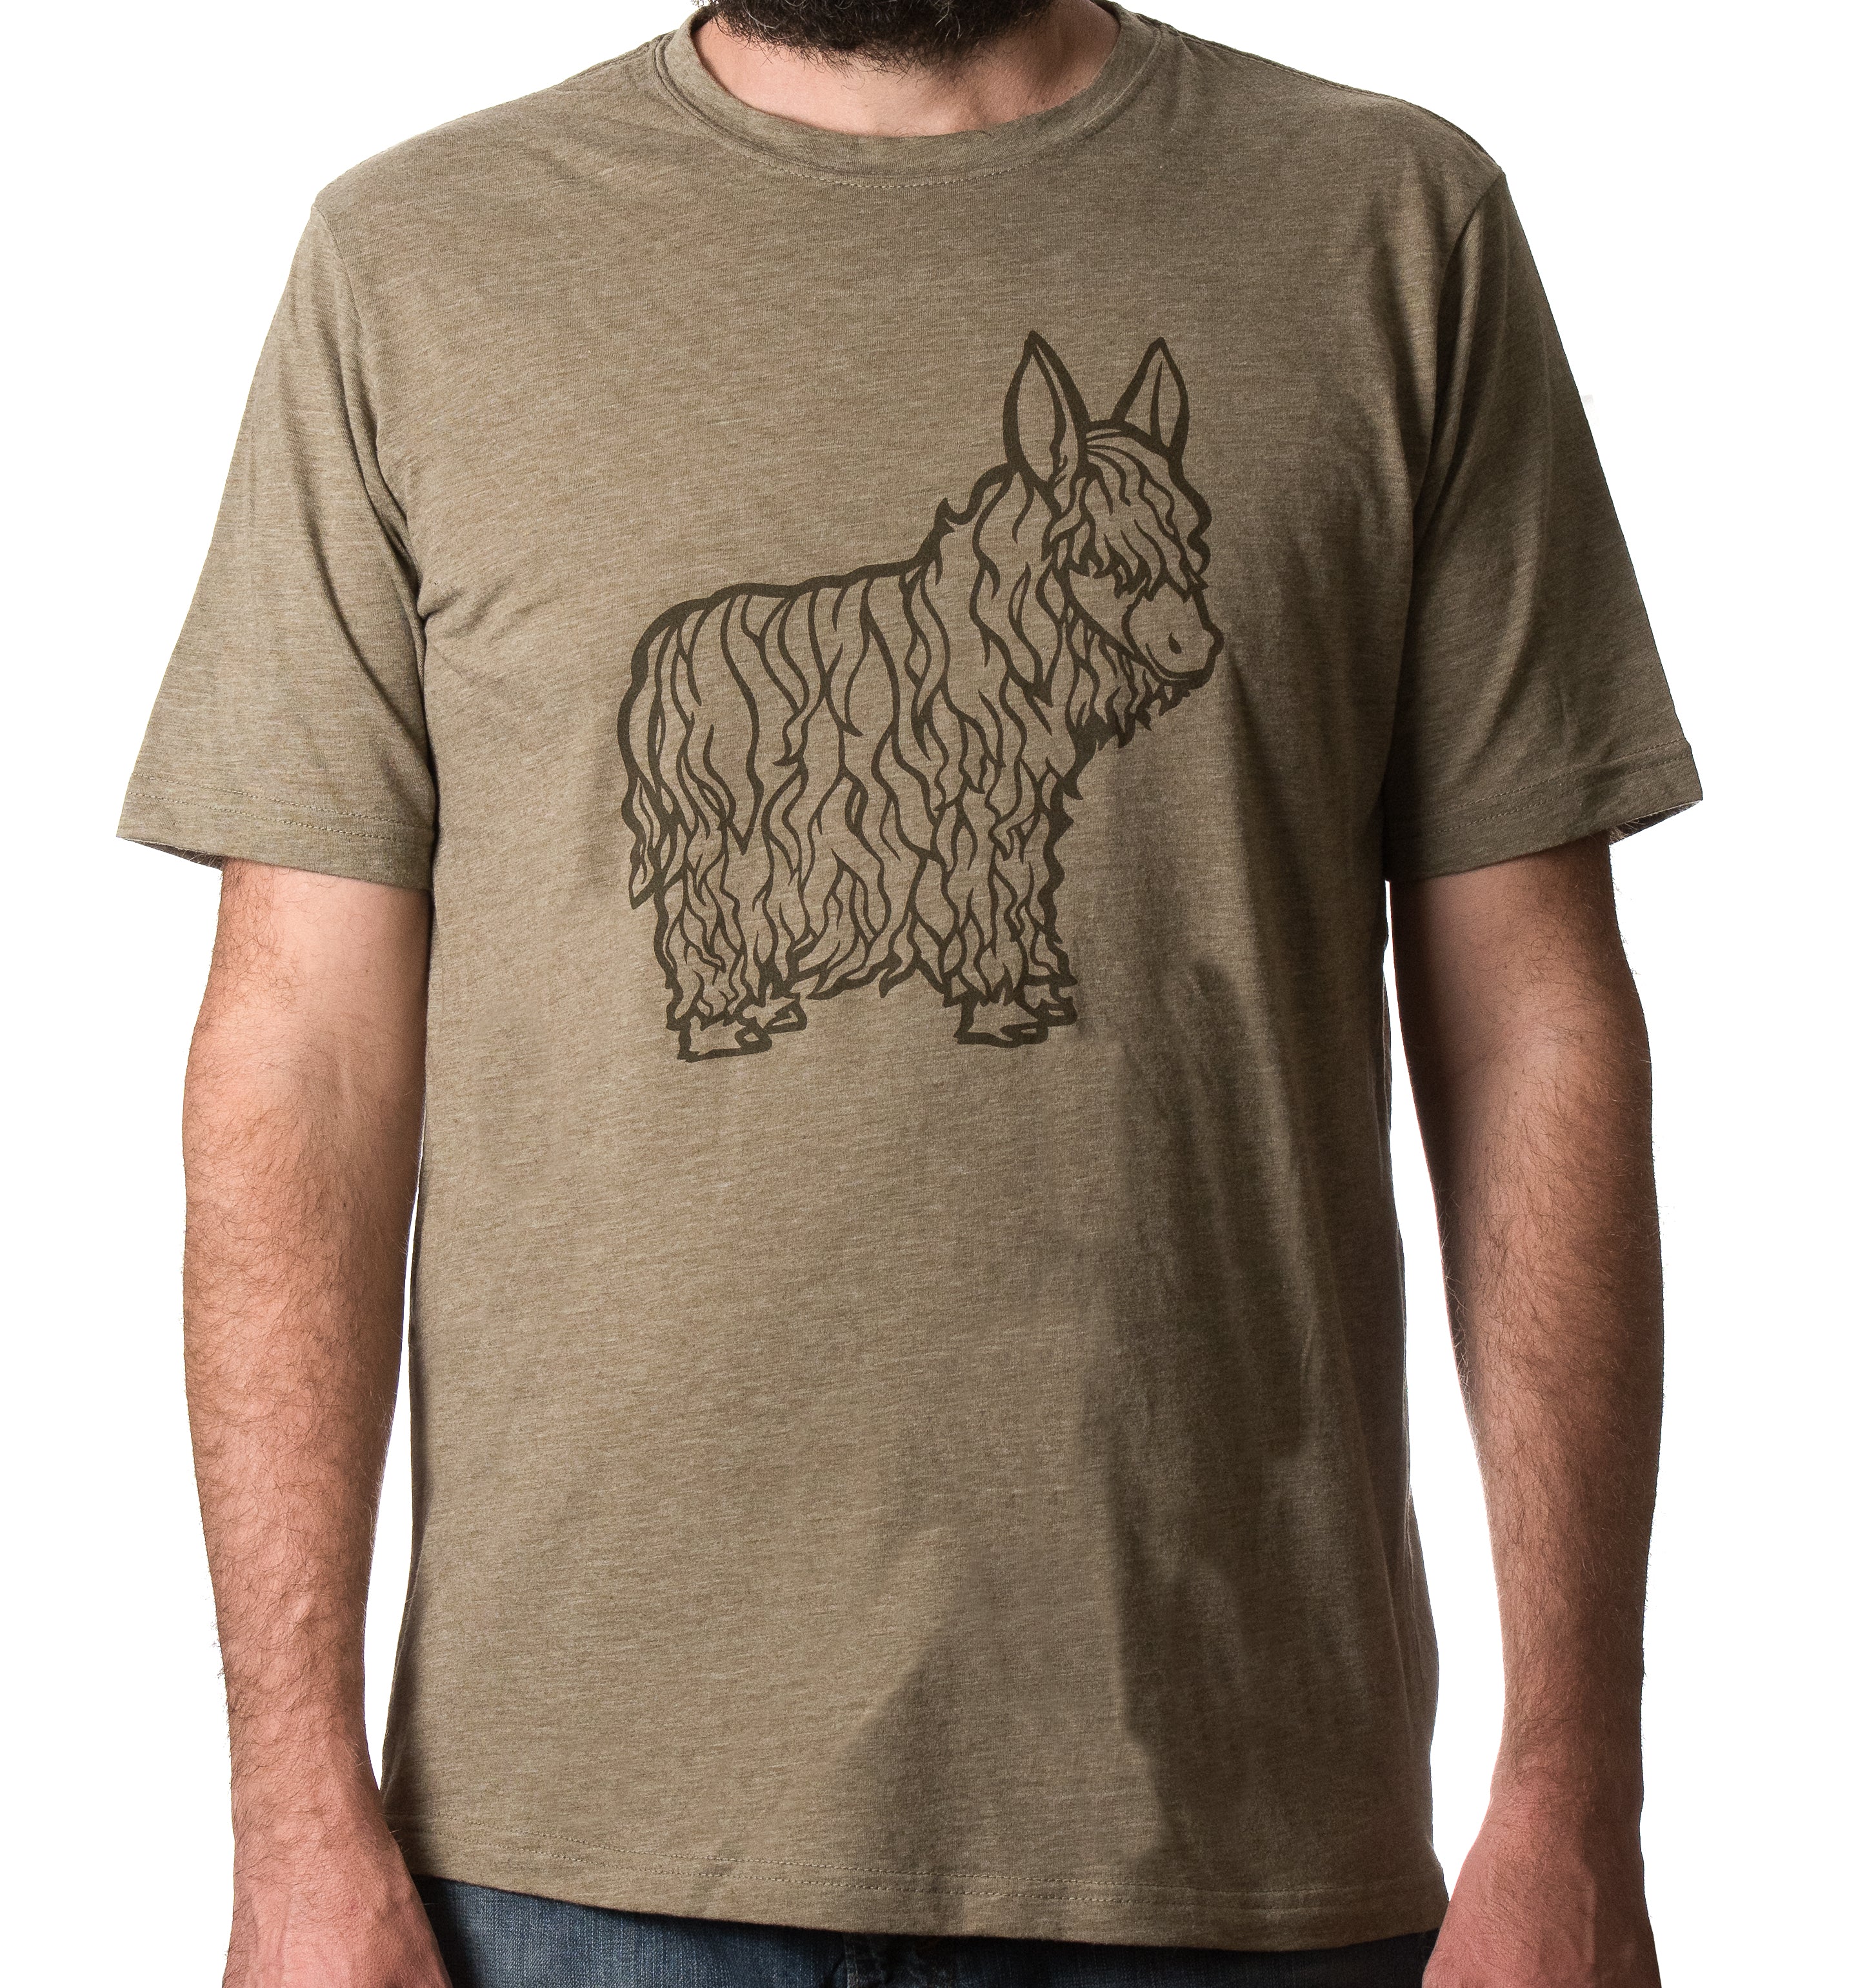 BURRITO T-shirt Sage - Burrito Gear